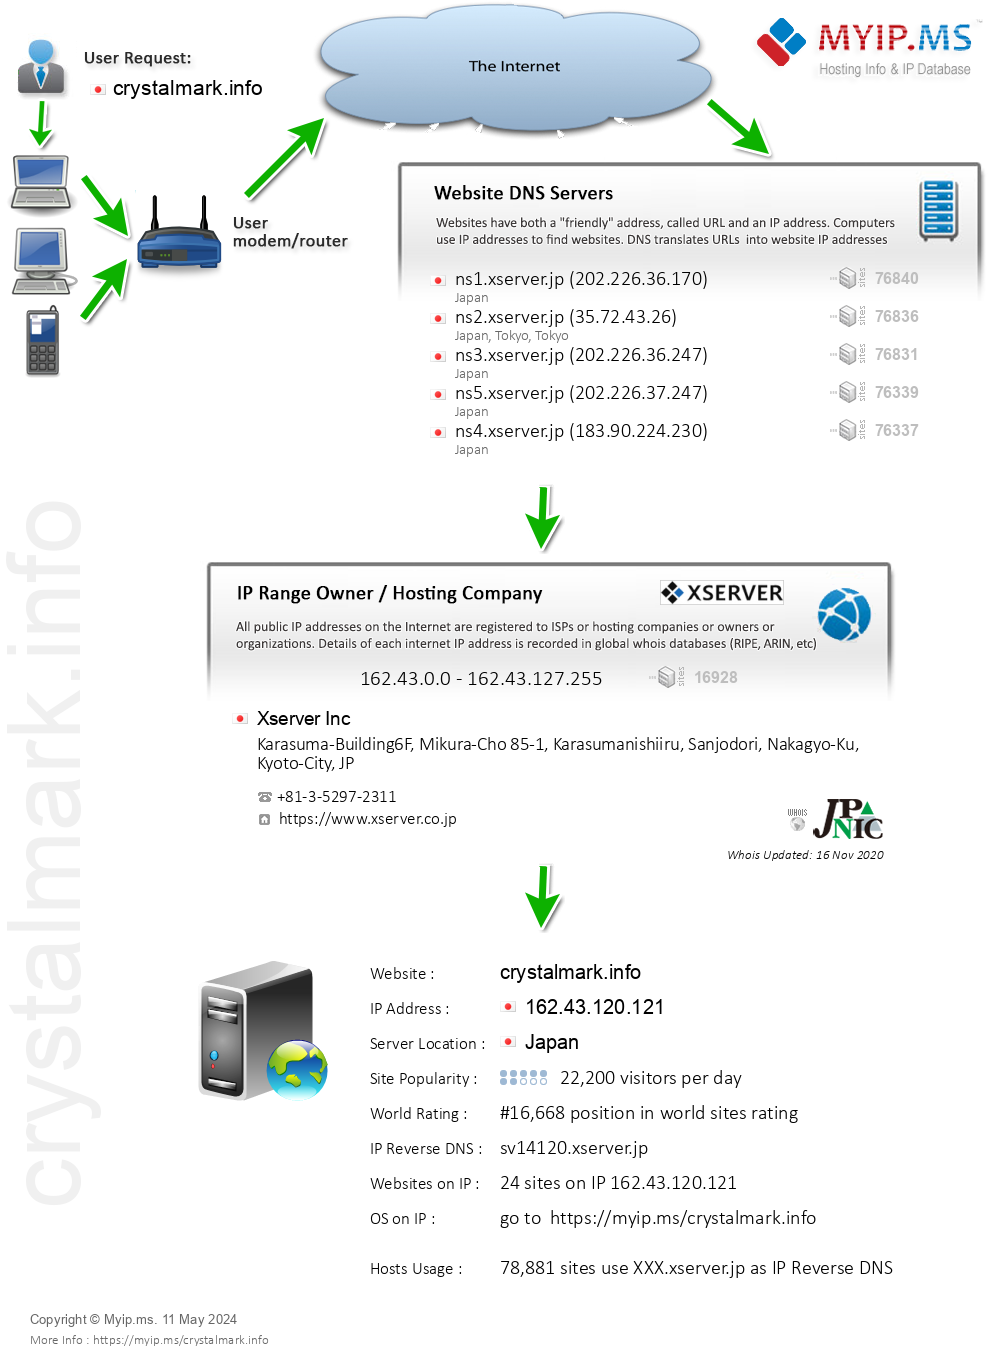 Crystalmark.info - Website Hosting Visual IP Diagram